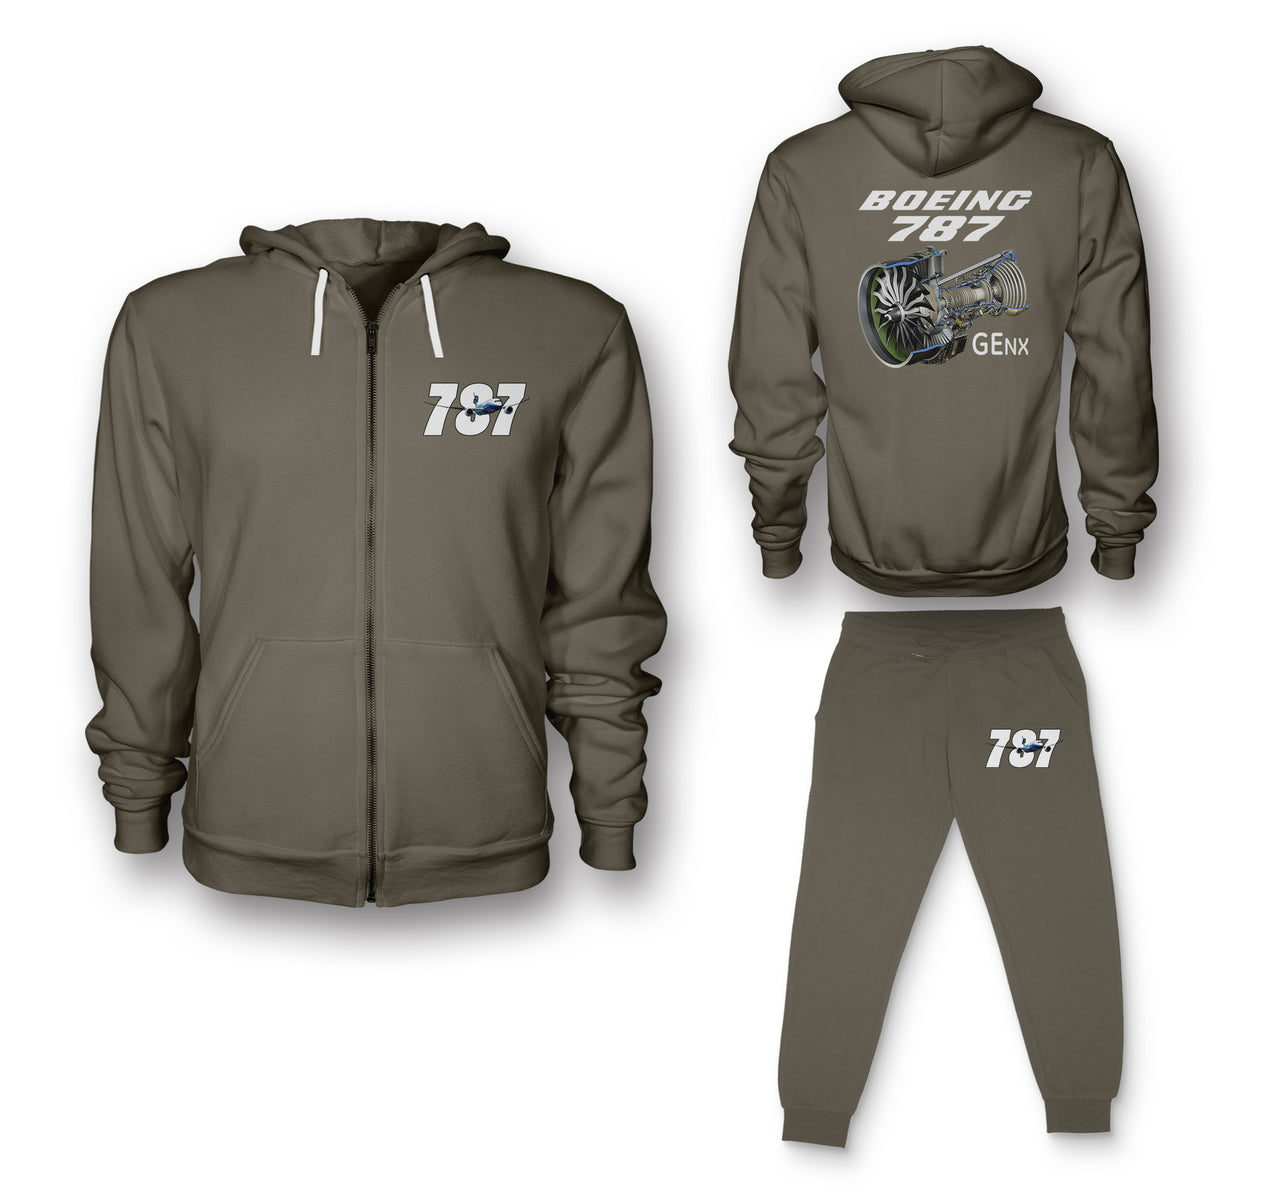 Boeing 787 & GENX Engine Designed Zipped Hoodies & Sweatpants Set